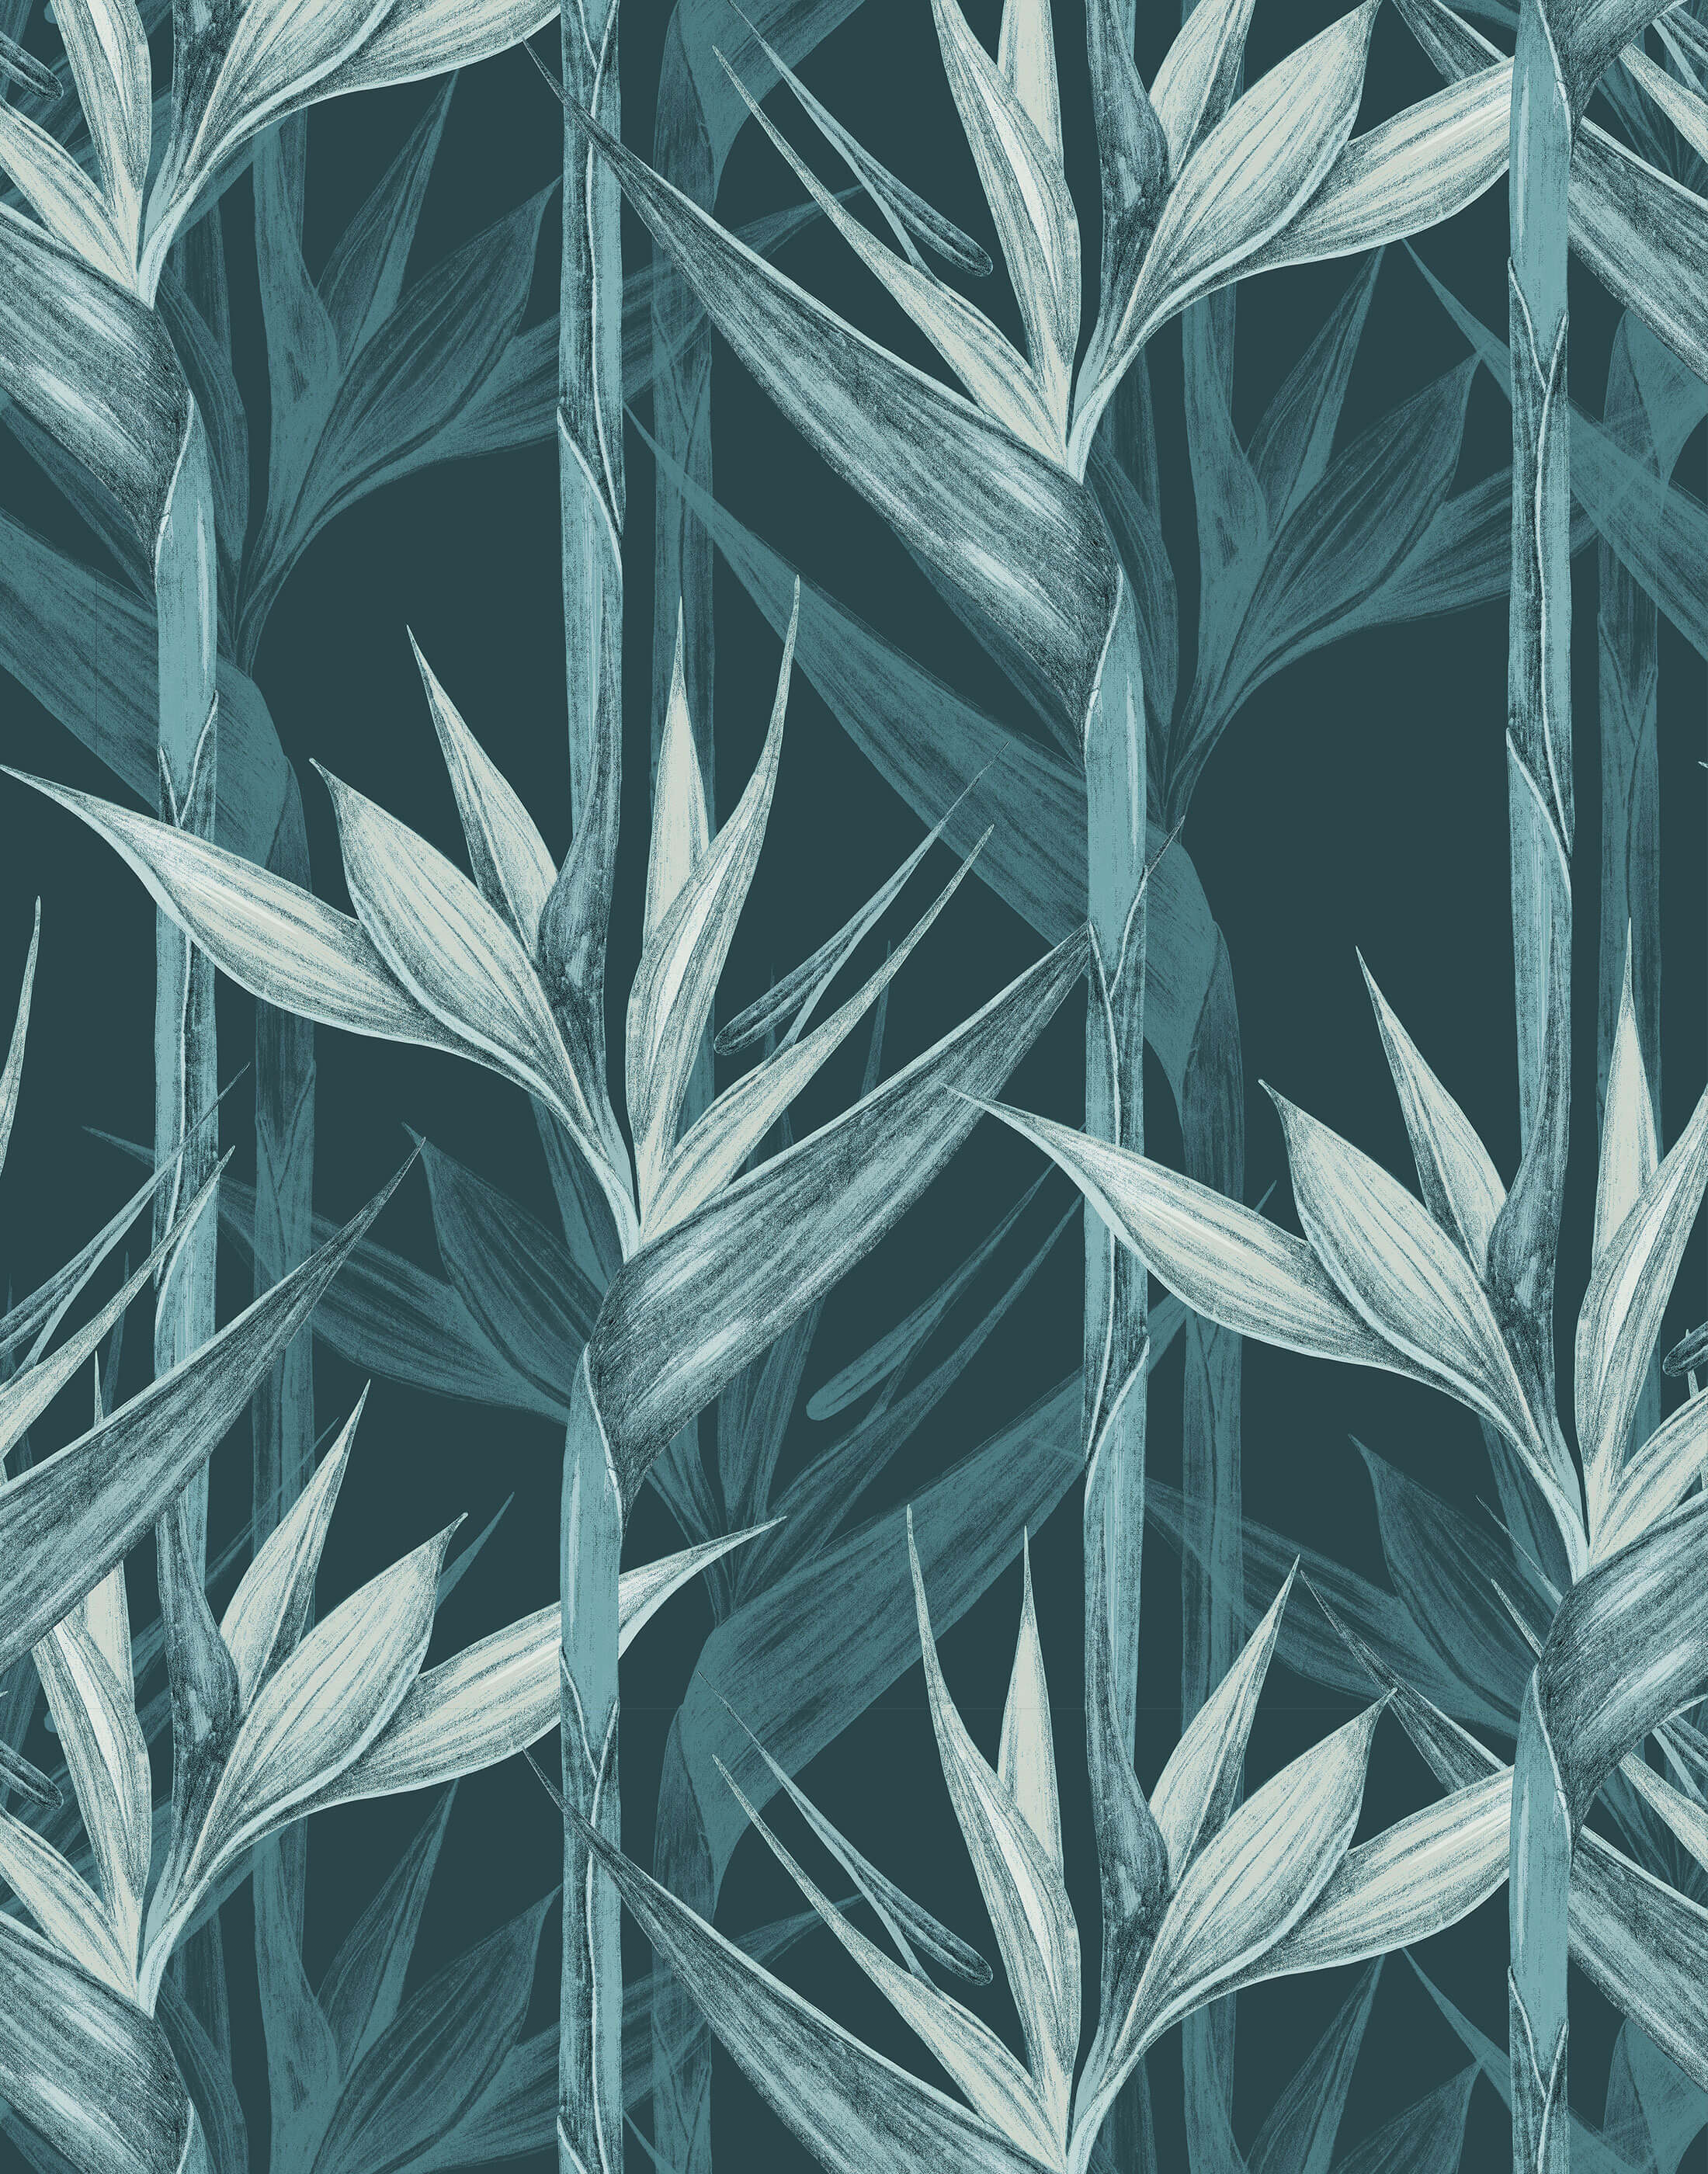 Teal  Turquoise Wallpaper  35 Designs With Light  Dark Options  Bobbi  Beck